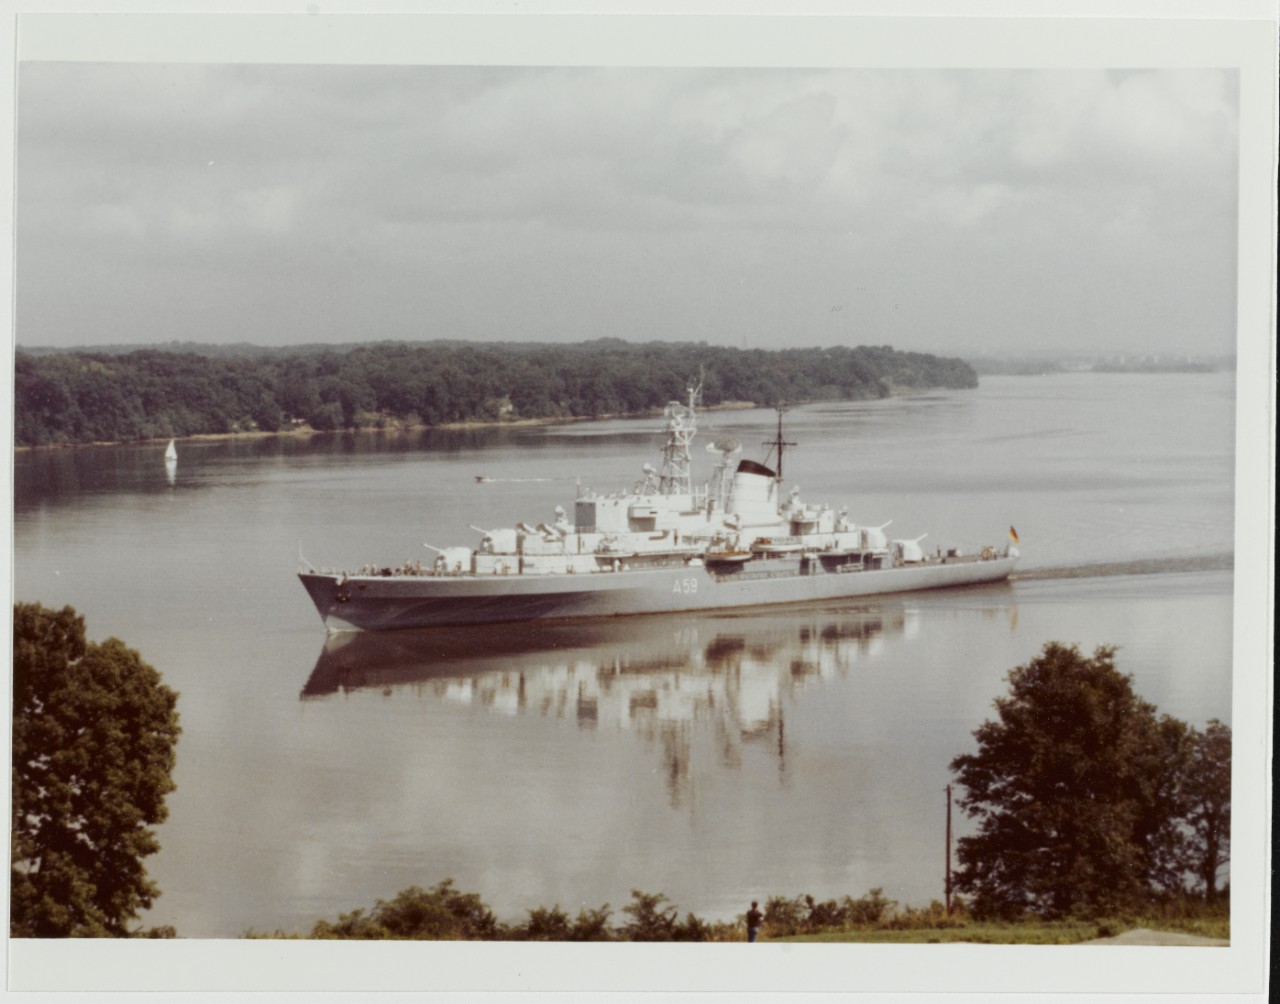 DEUTSCHLAND (German Training Ship, 1963) moving down the Potomac River following a call at Alexandria, Virginia, July 23, 1984